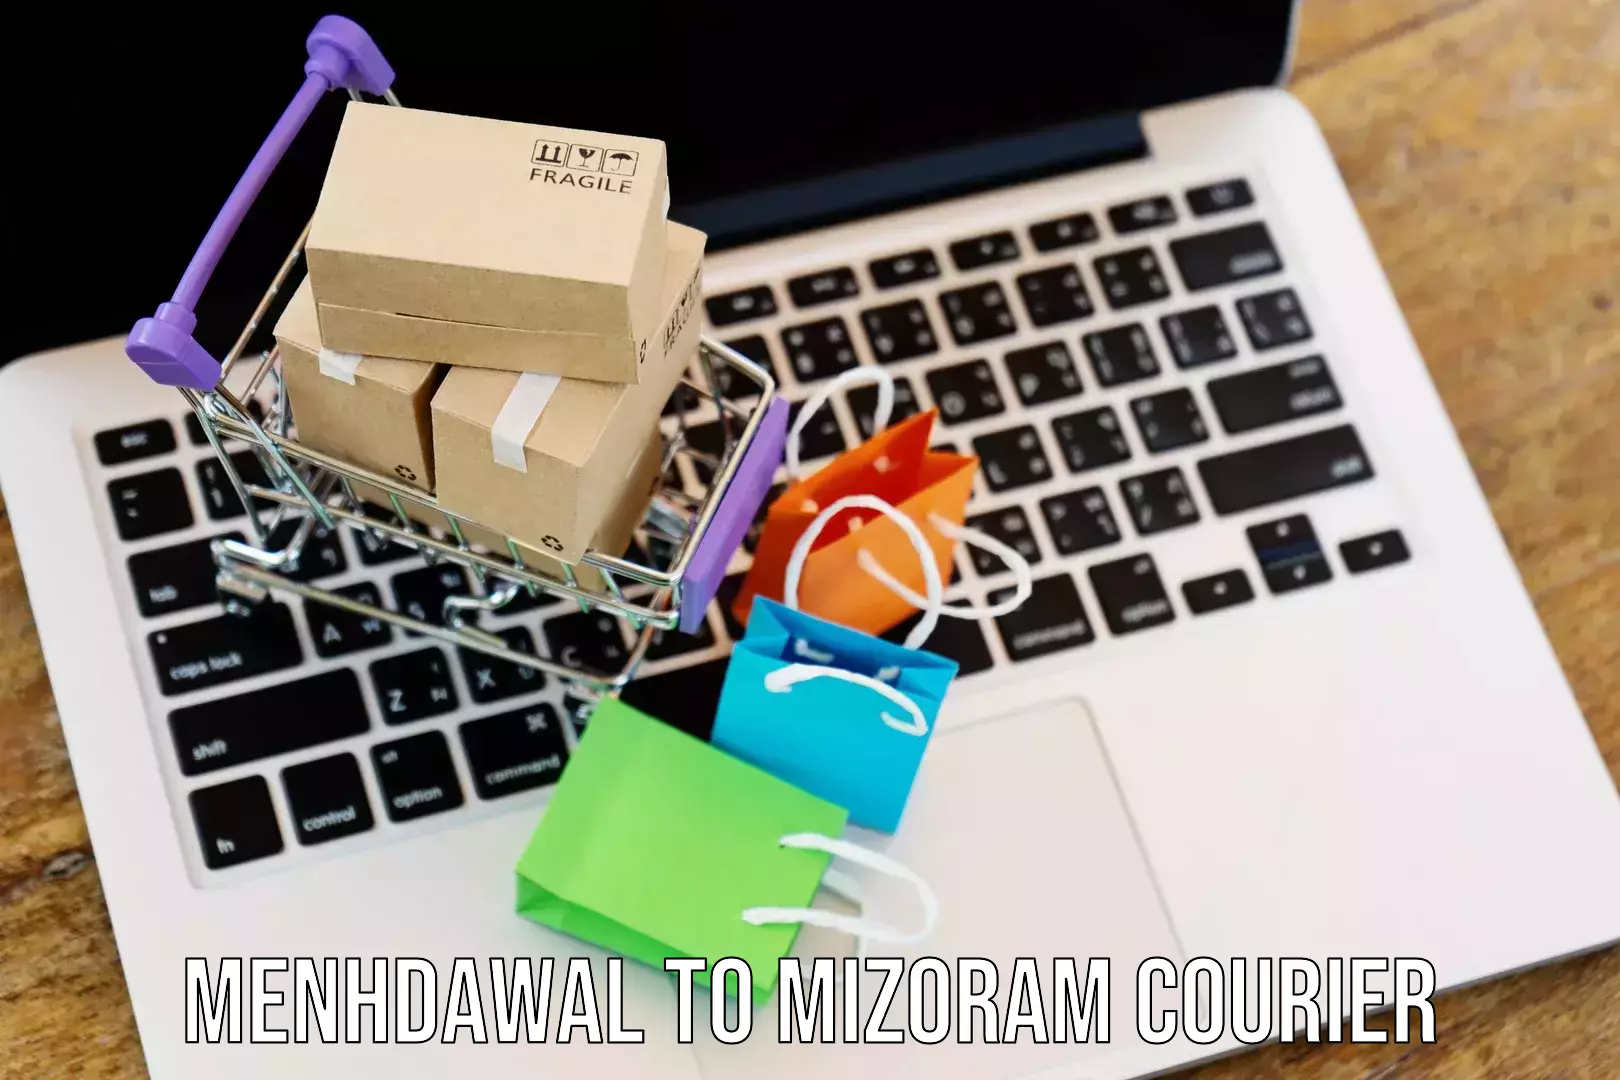 Return courier service Menhdawal to Mizoram